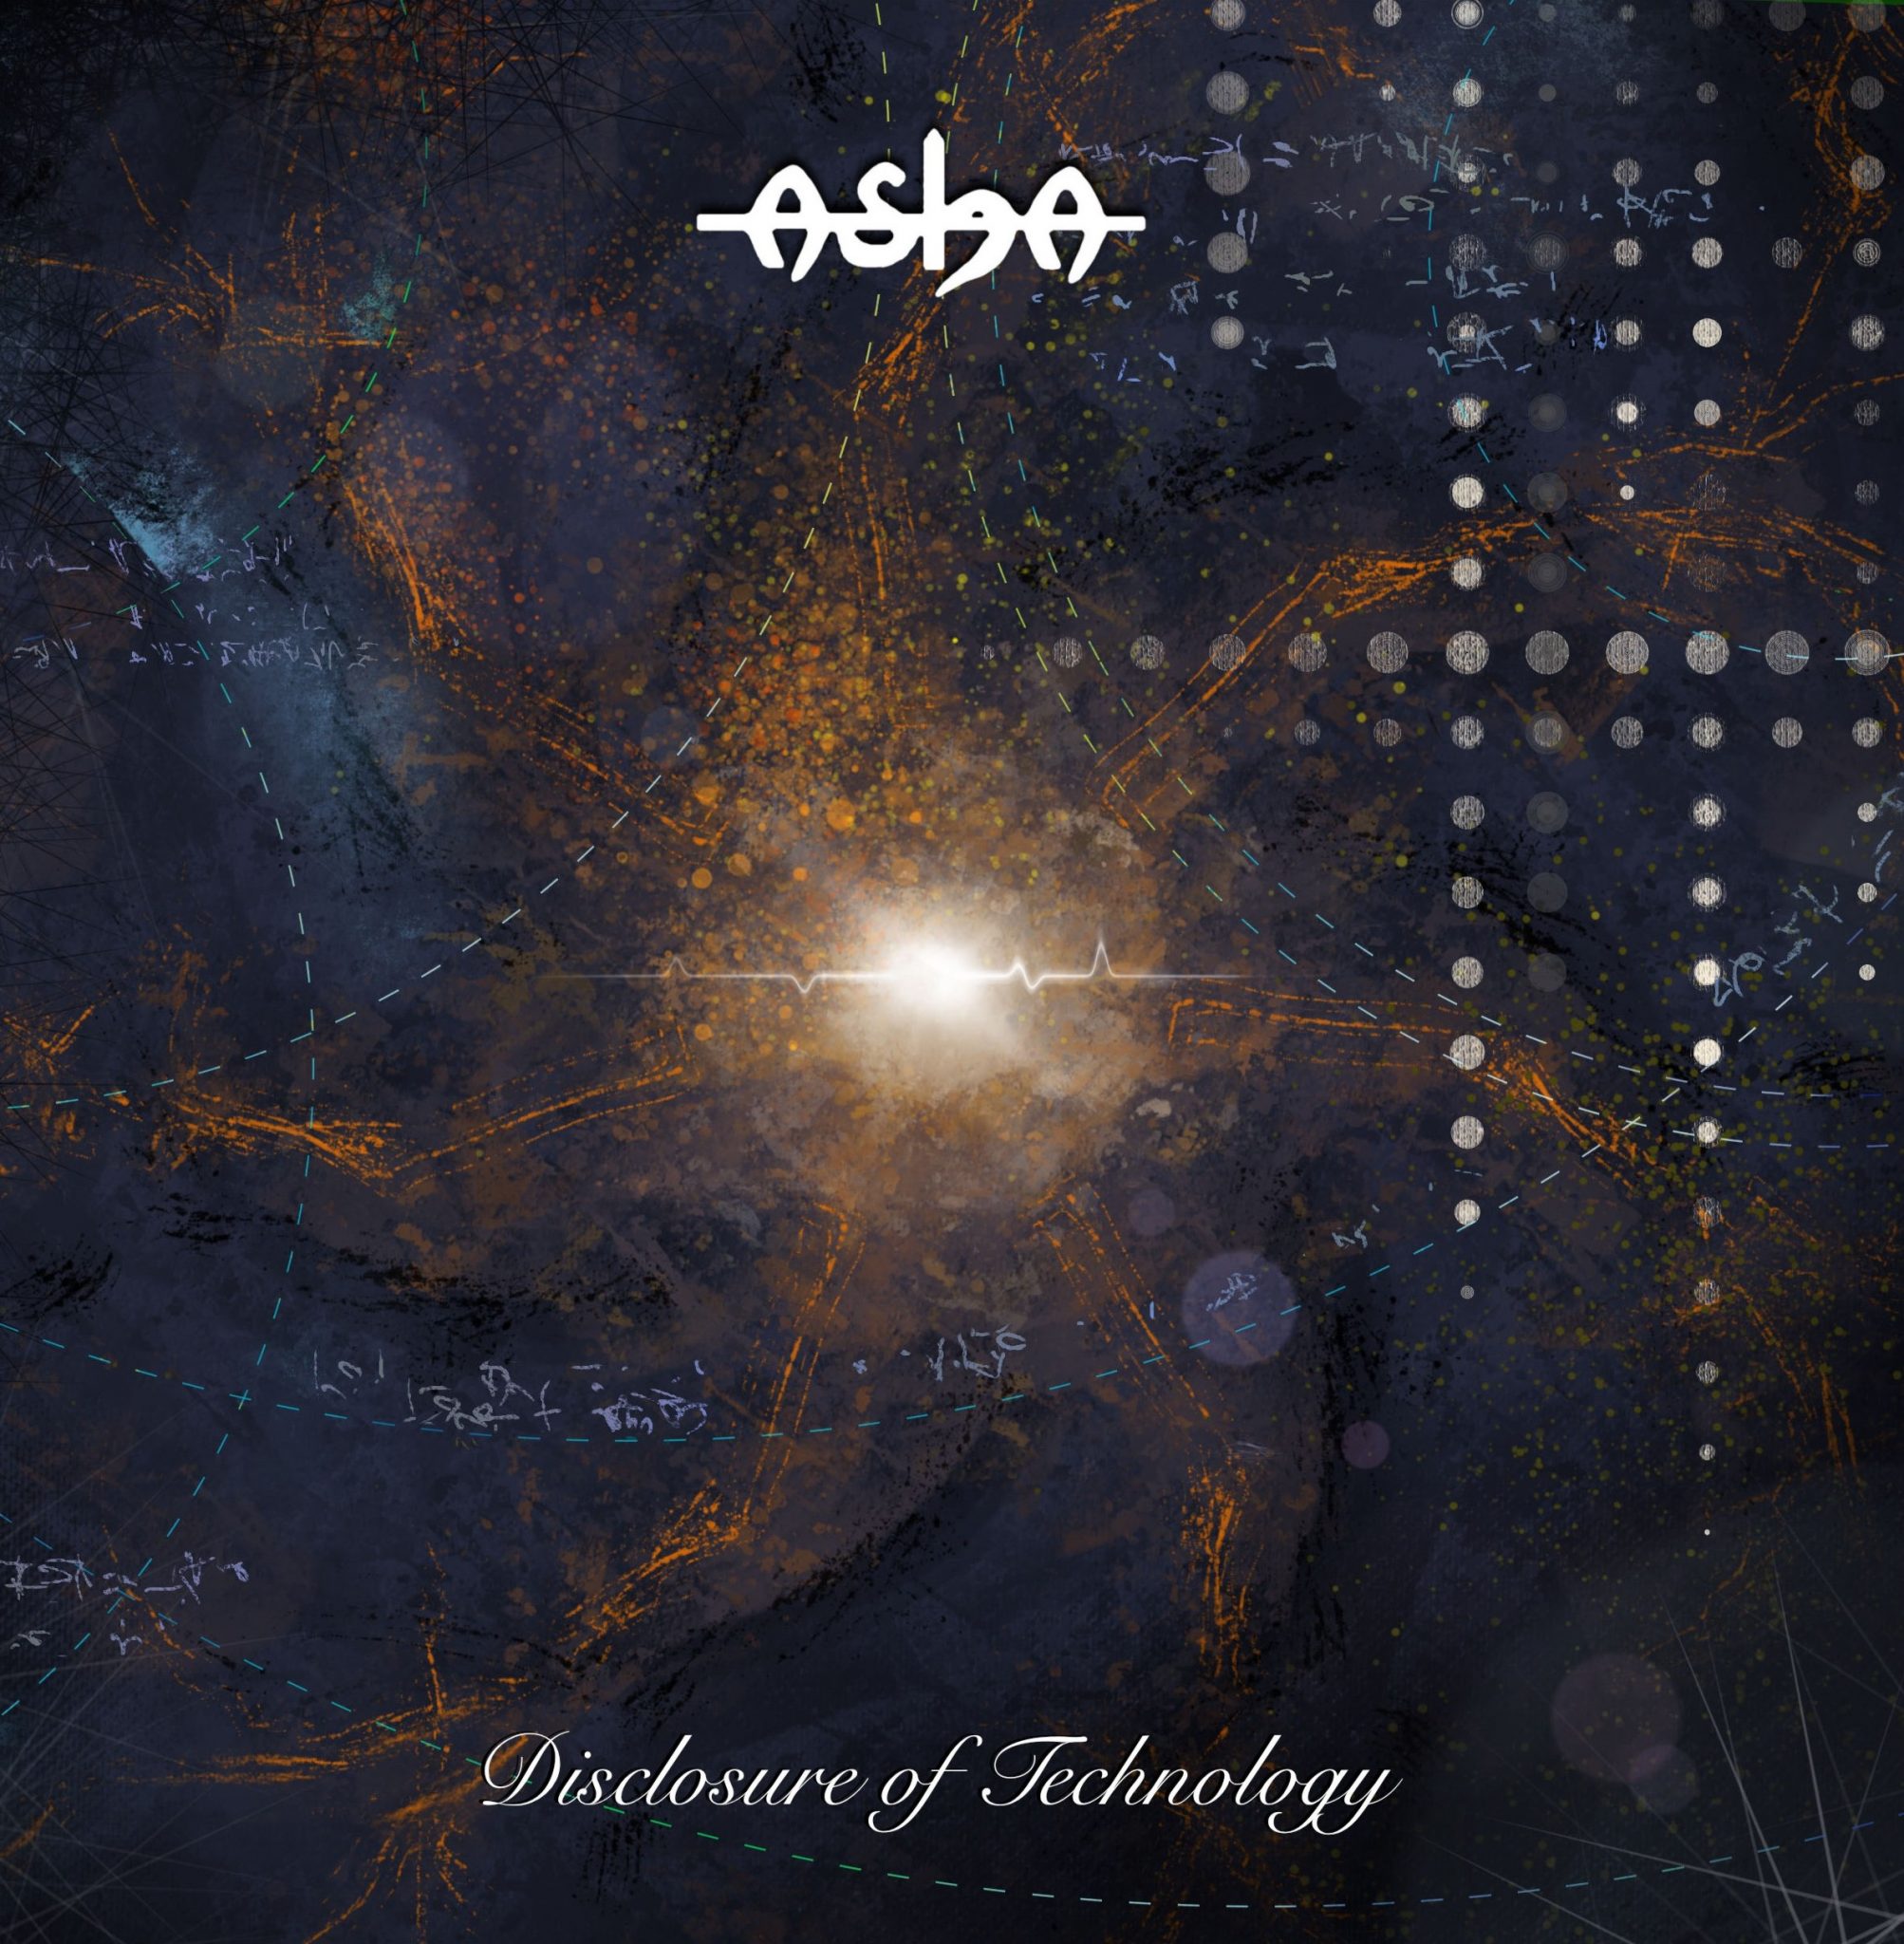 ASHA – Disclosure of technology